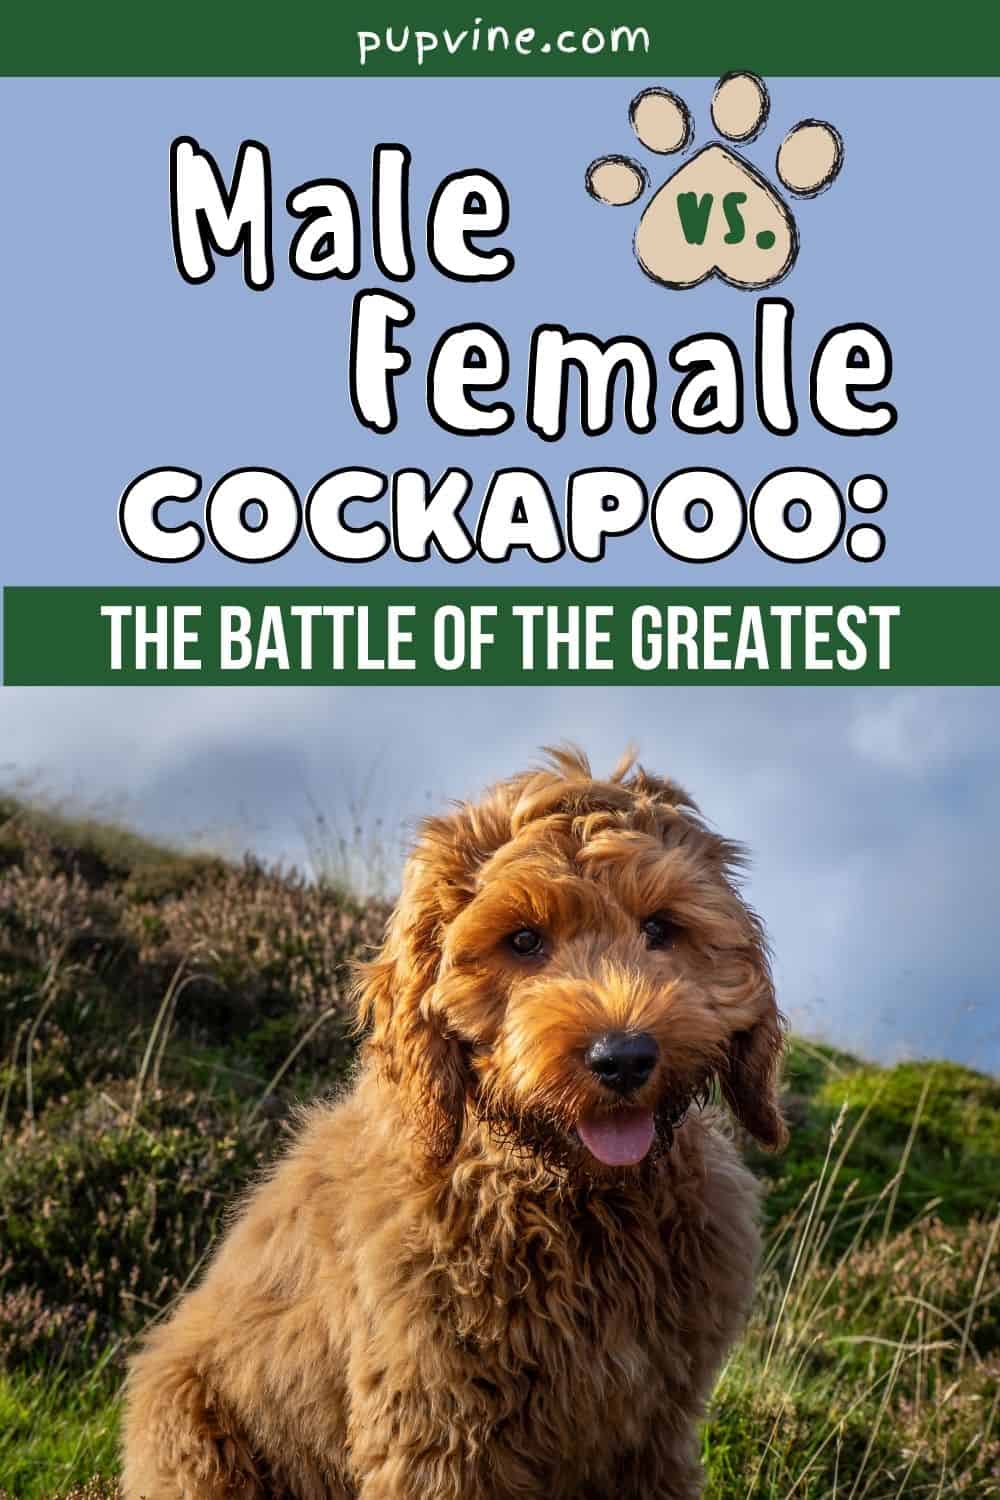 Male Vs Female Cockapoo: The Battle Of The Greatest